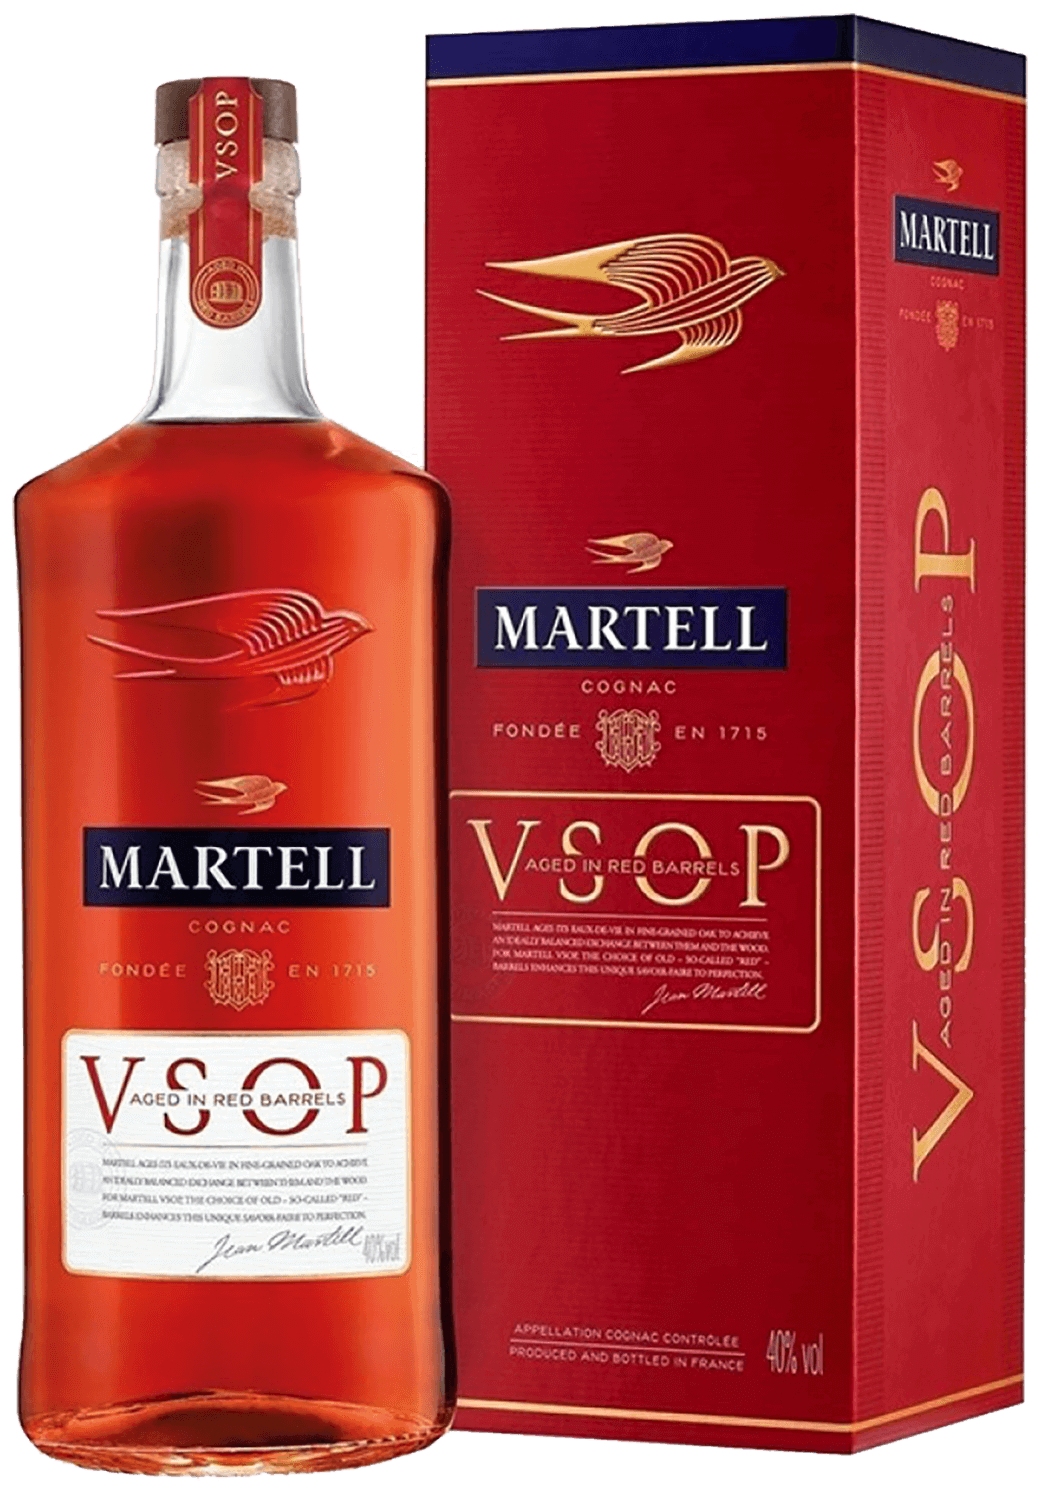 Martell VSOP Aged in Red Barrels (gift box) martell vsop gift box